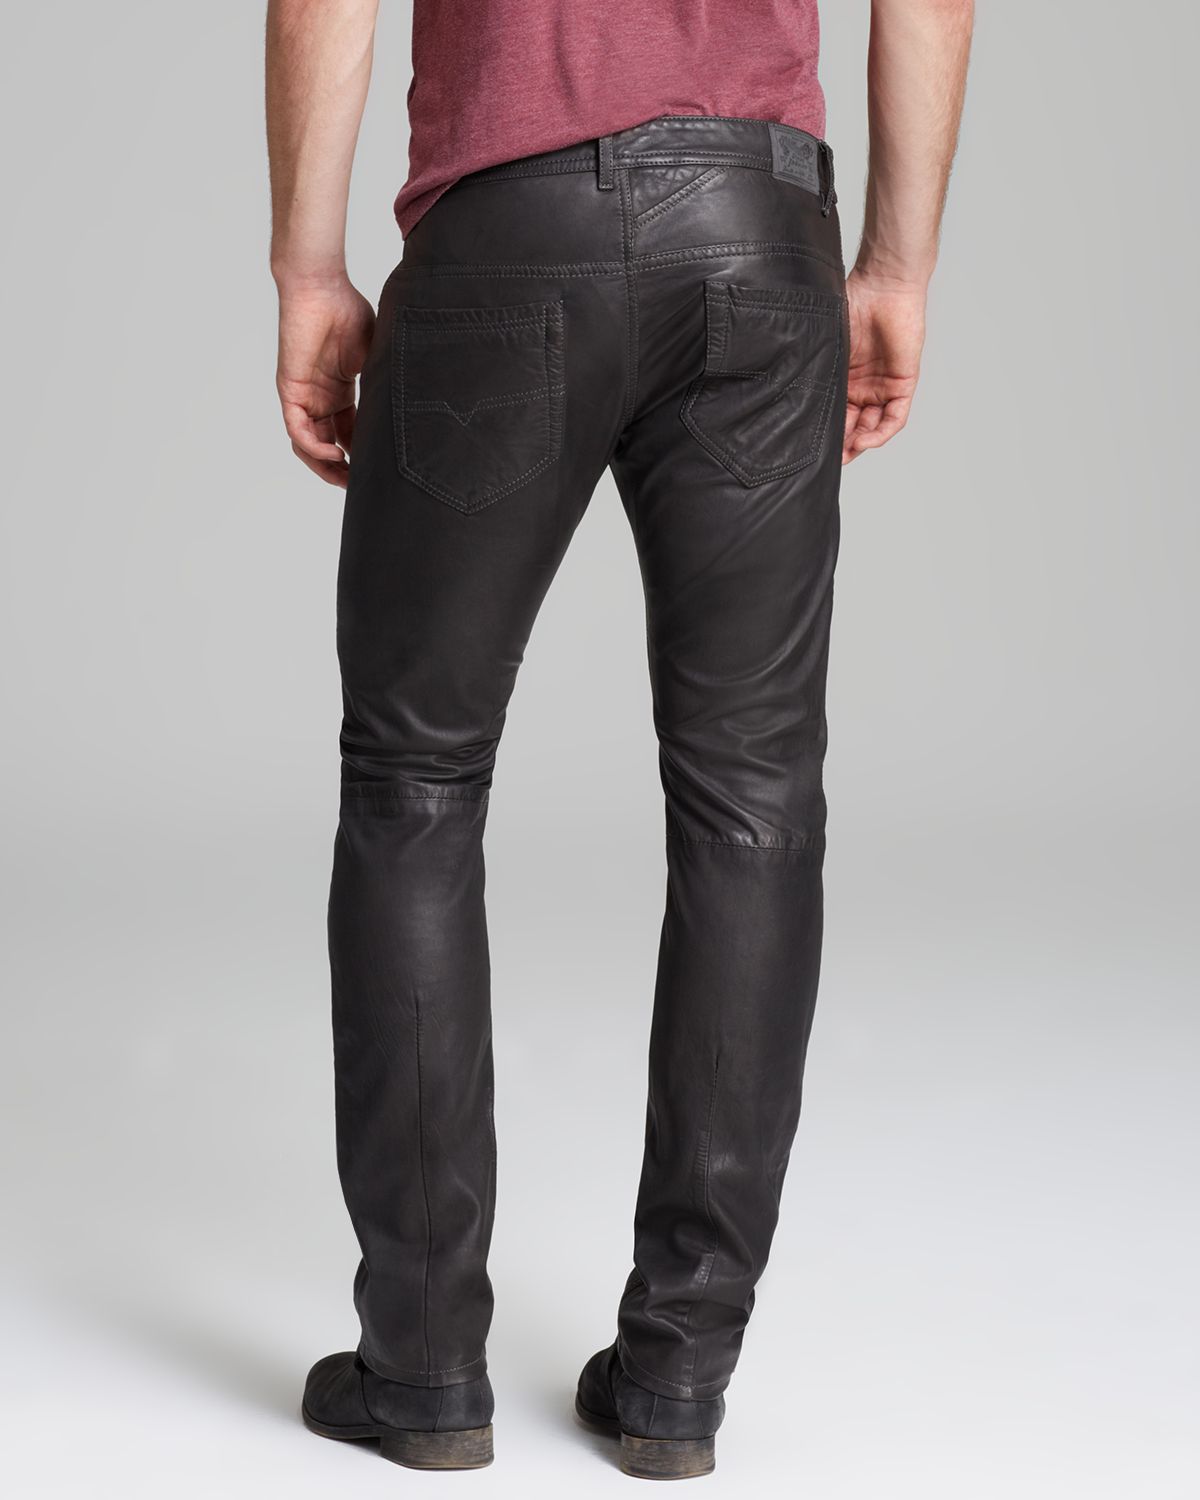 Lyst - Diesel Jeans Thavar Leather Slim Fit in Black in Black for Men